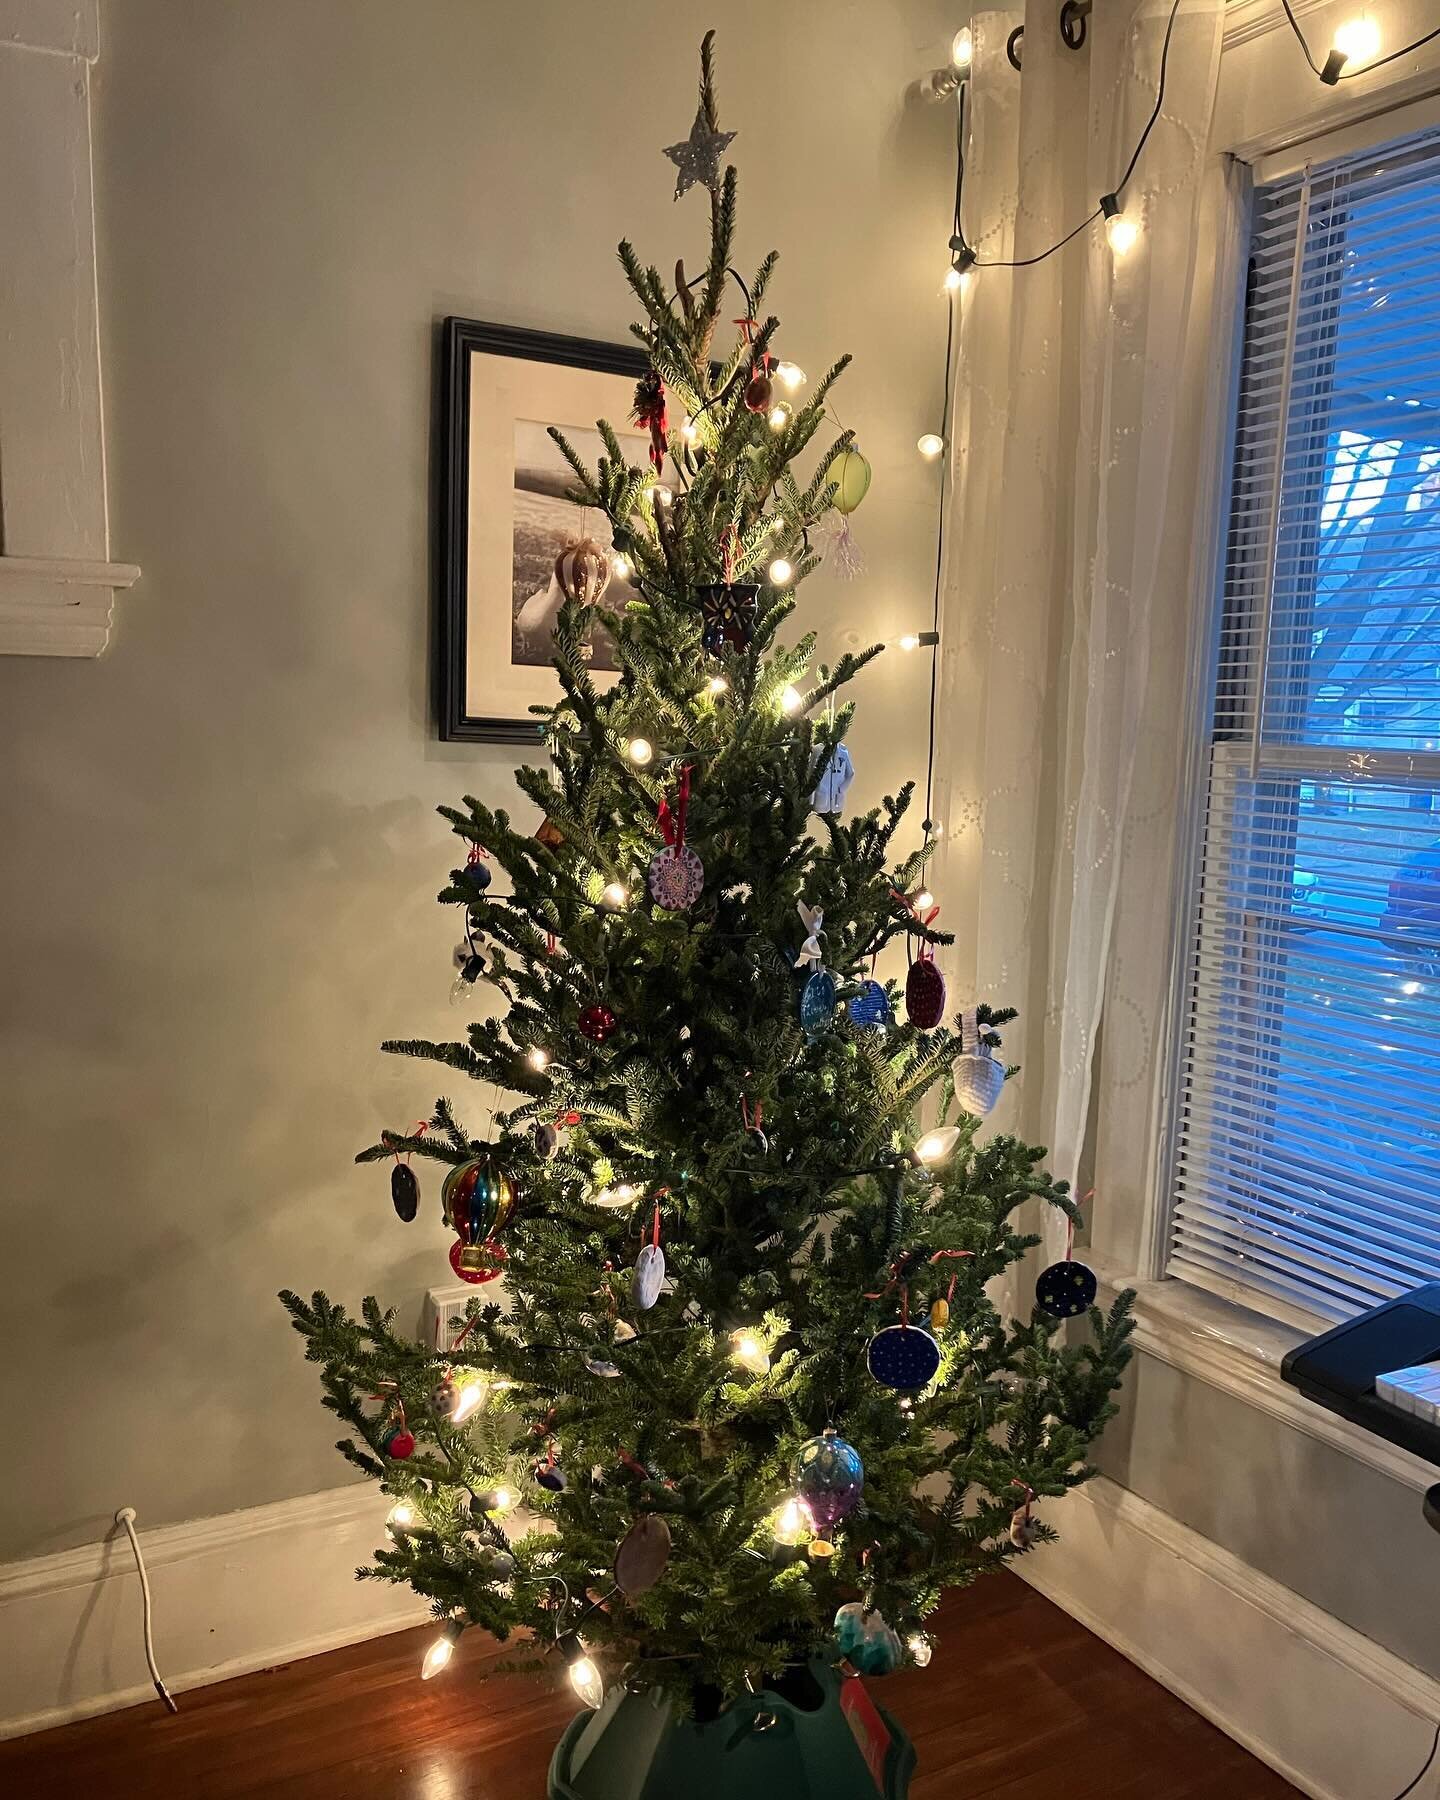 The tree is 🆙

Happy holidays, Happy Hanukkah, and Merry Christmas! 
🎄